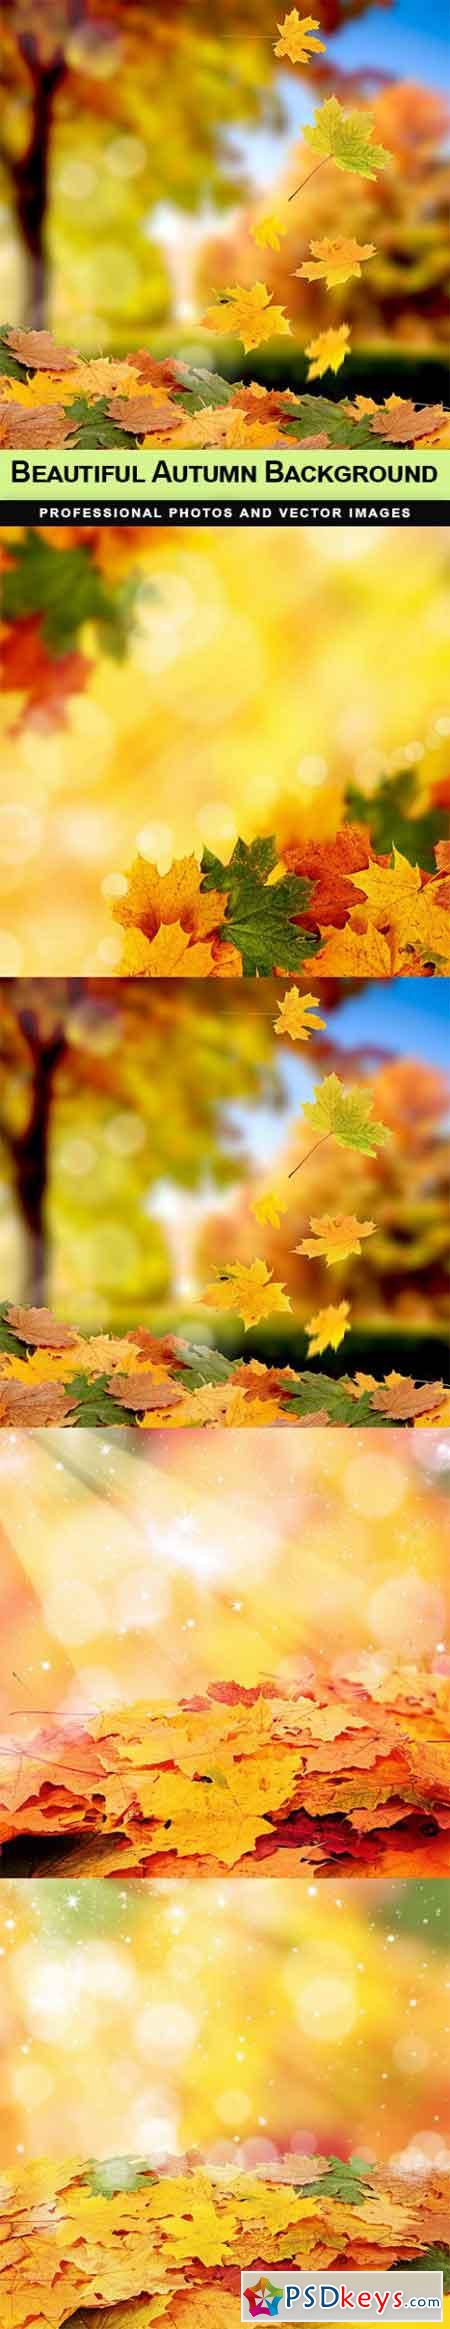 Beautiful Autumn Background - 4 UHQ JPEG